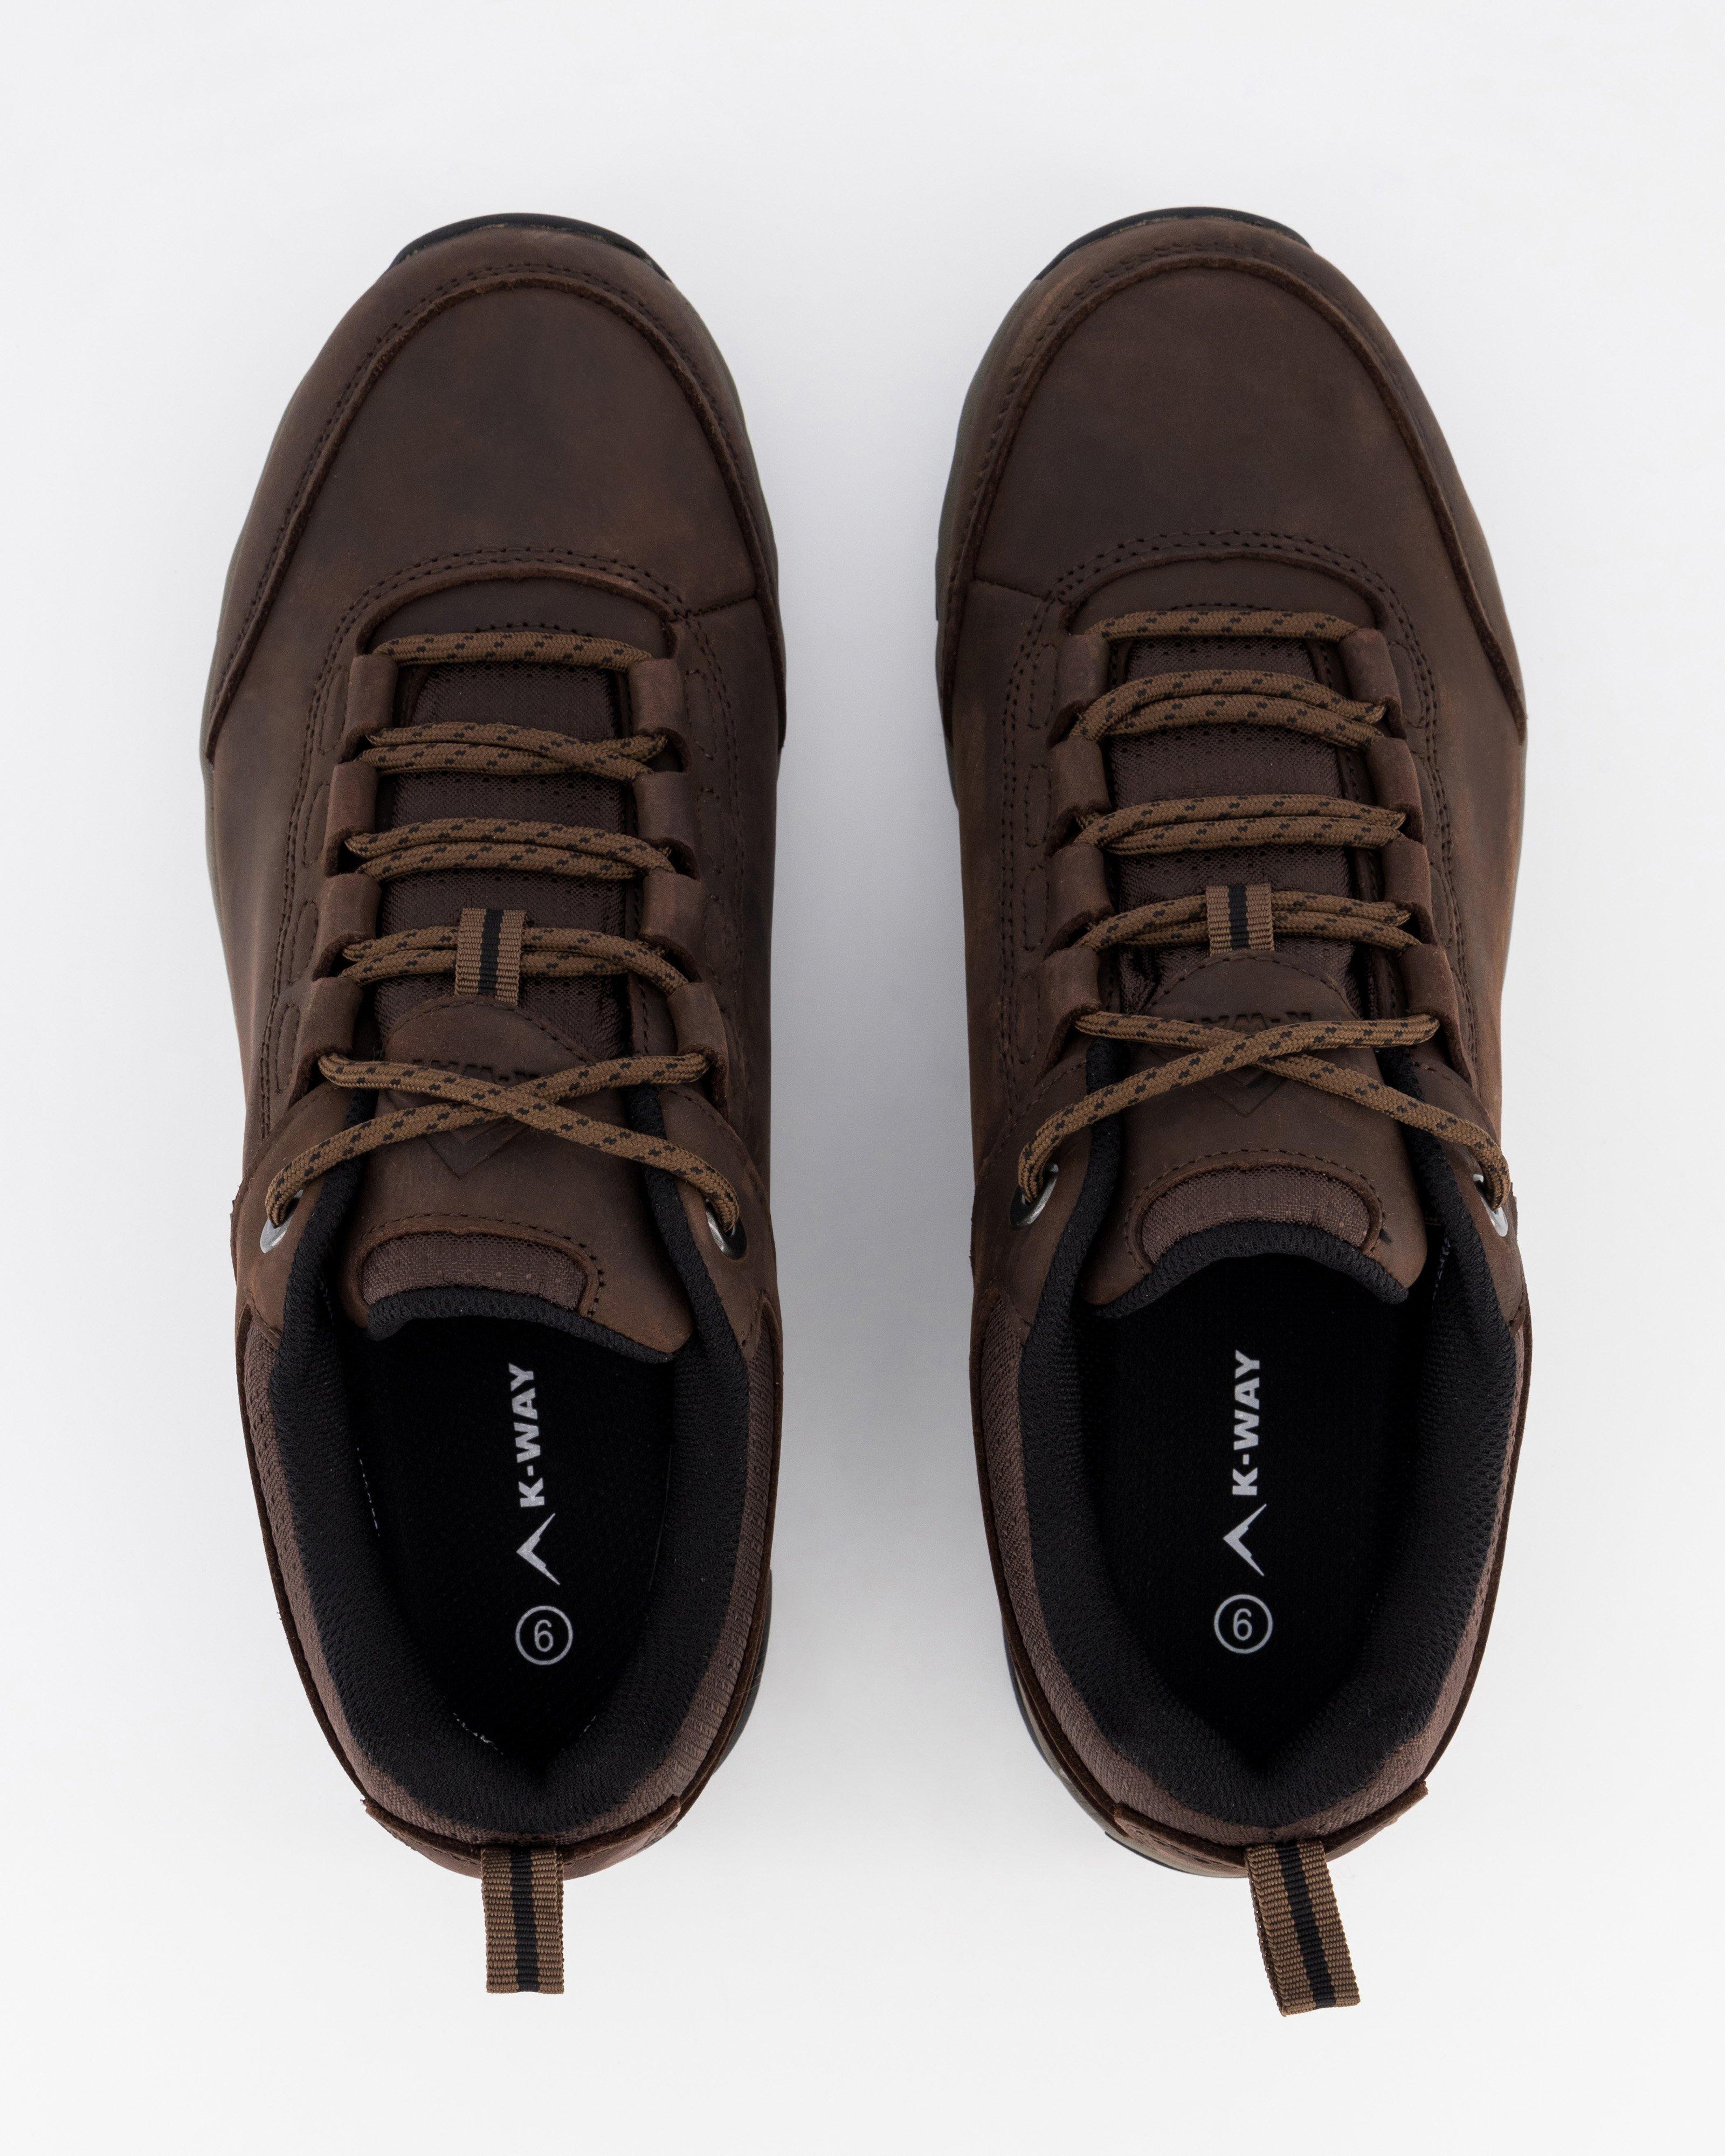 K-Way Men's Wanderer Hiking Shoes -  Brown/Black